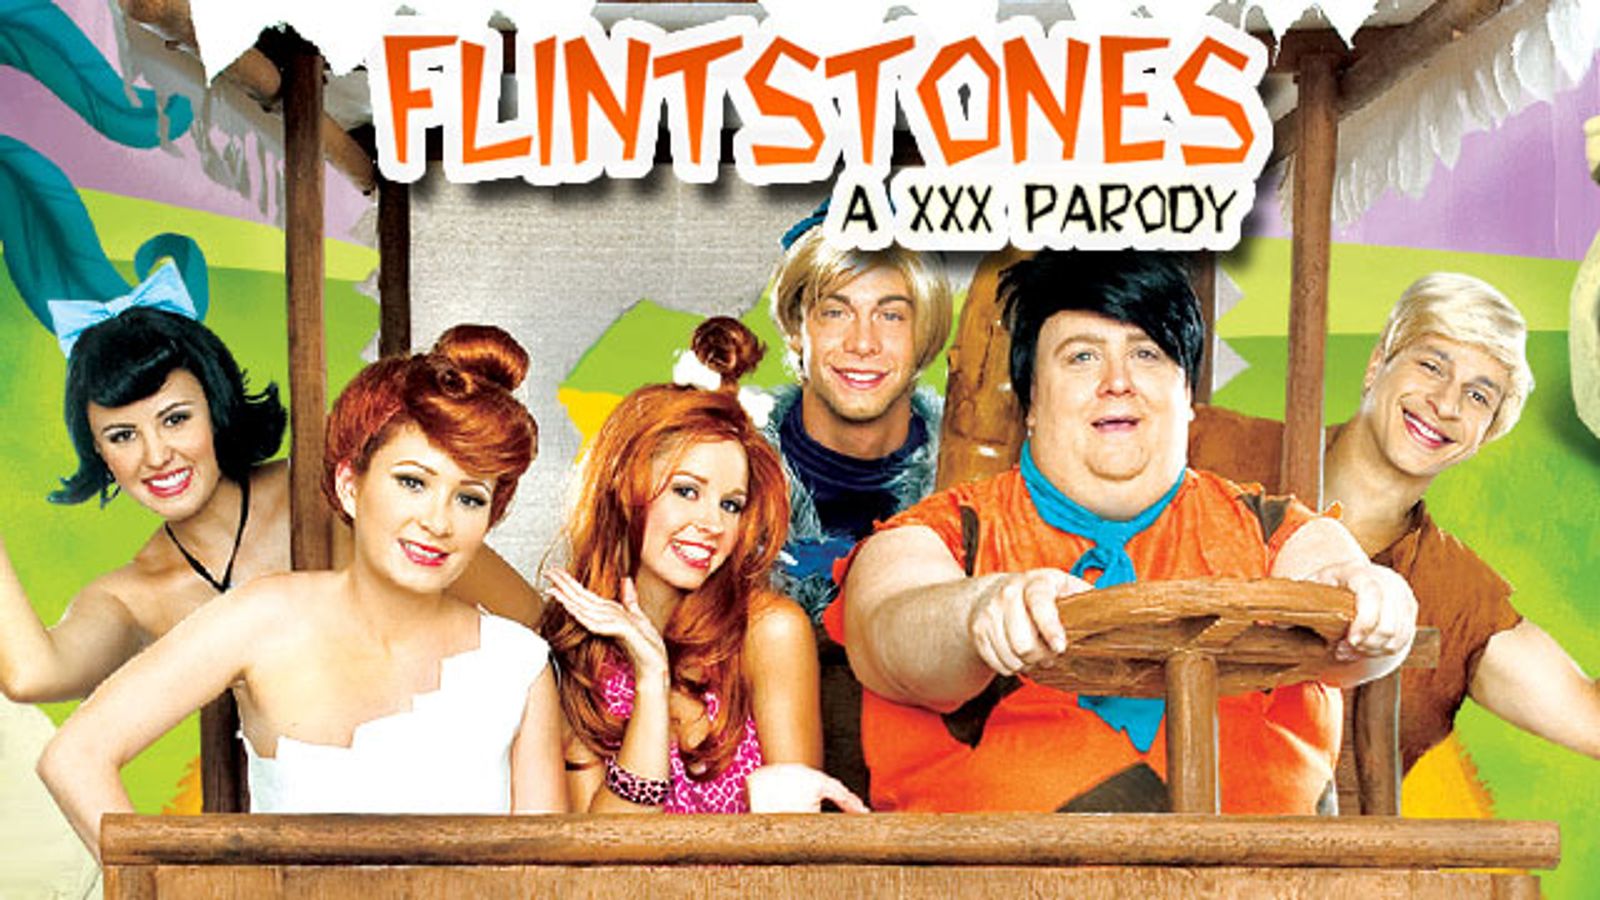 Flintstones xxx parody